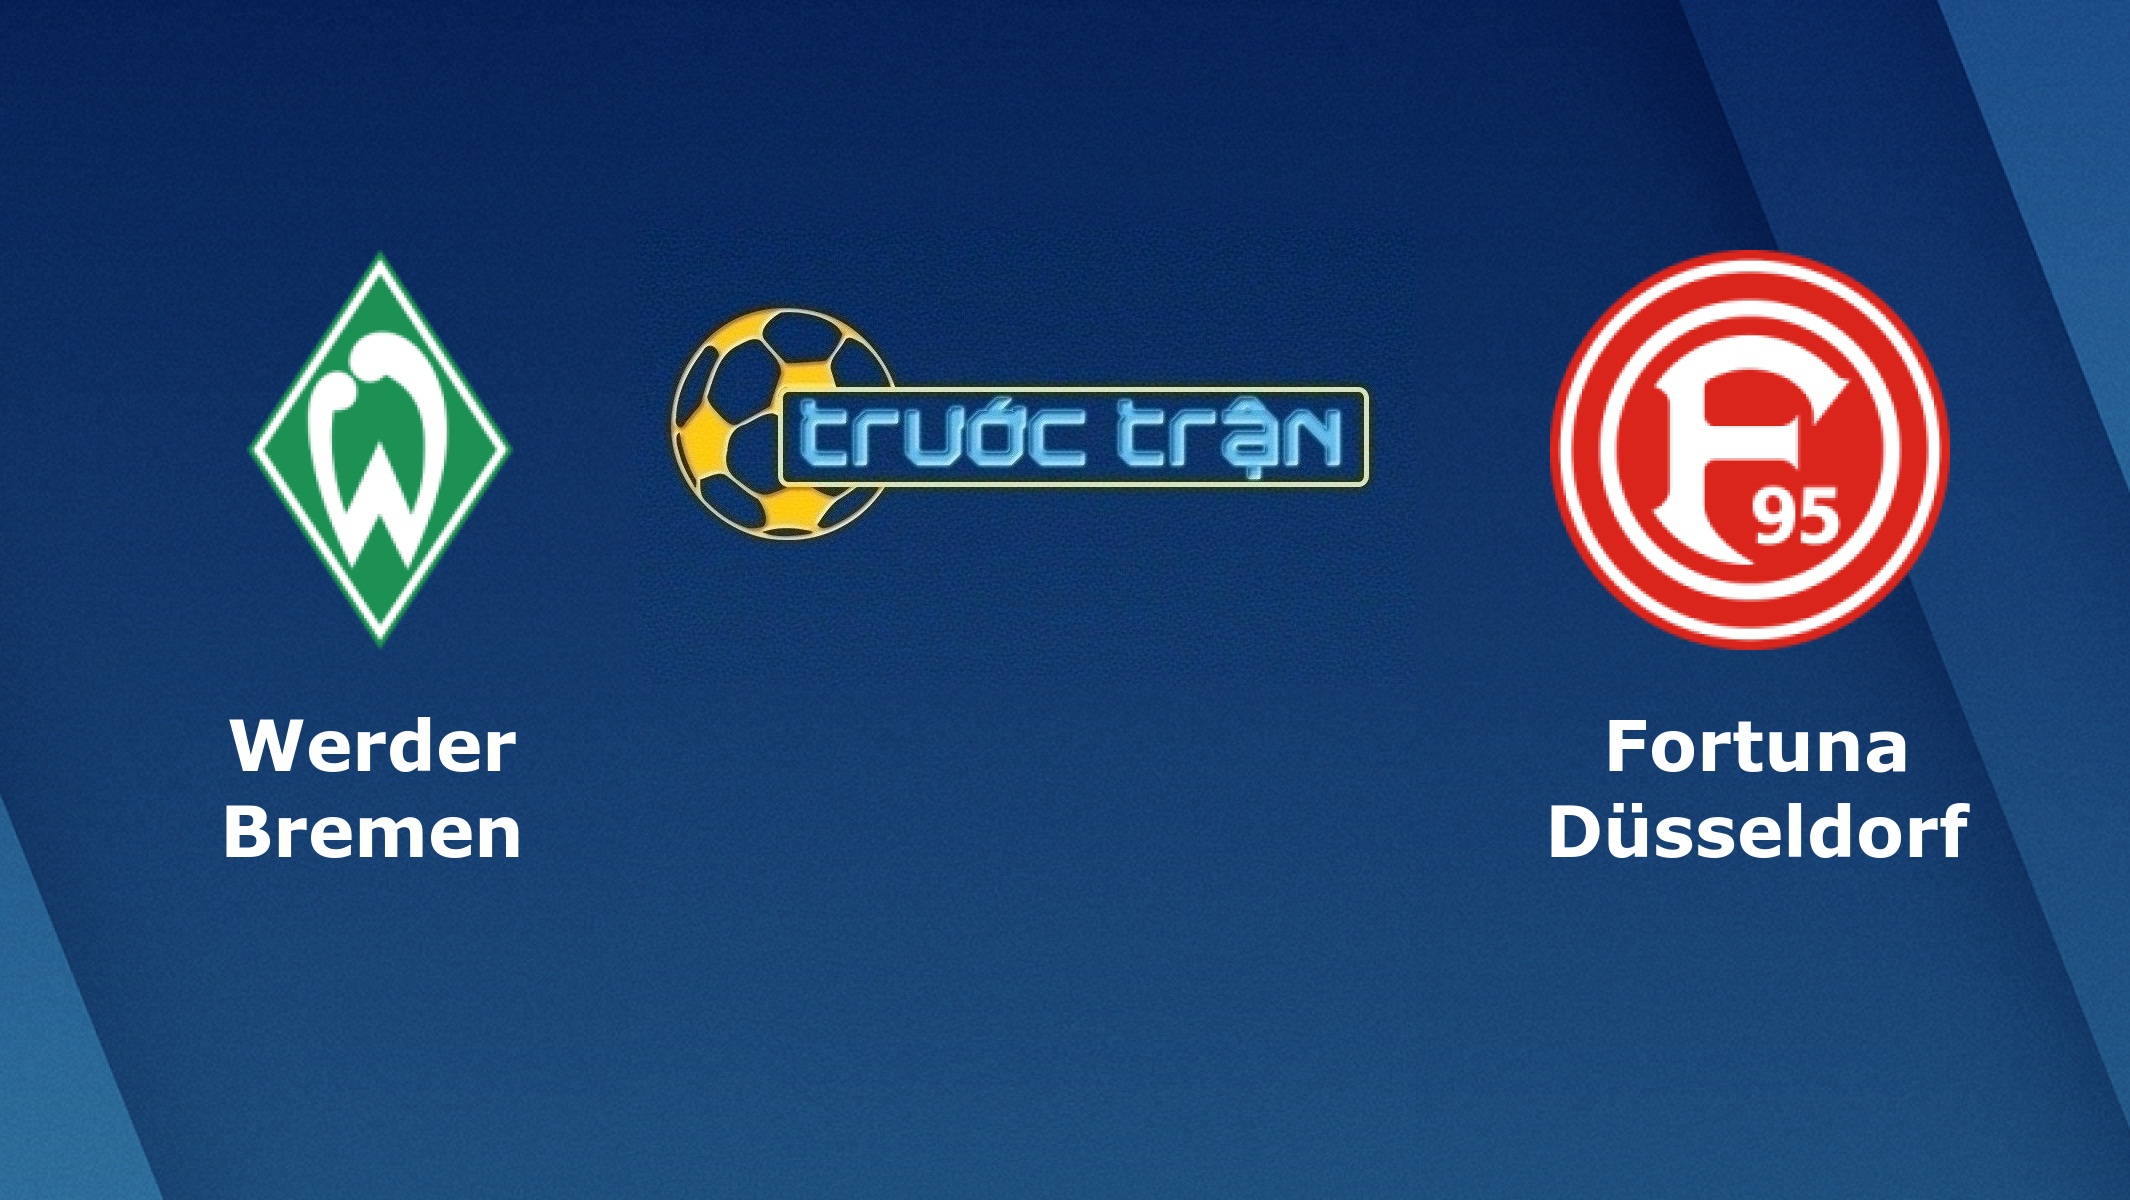 Werder Bremen vs Fortuna Dusseldorf – Tip kèo bóng đá hôm nay – 17/08